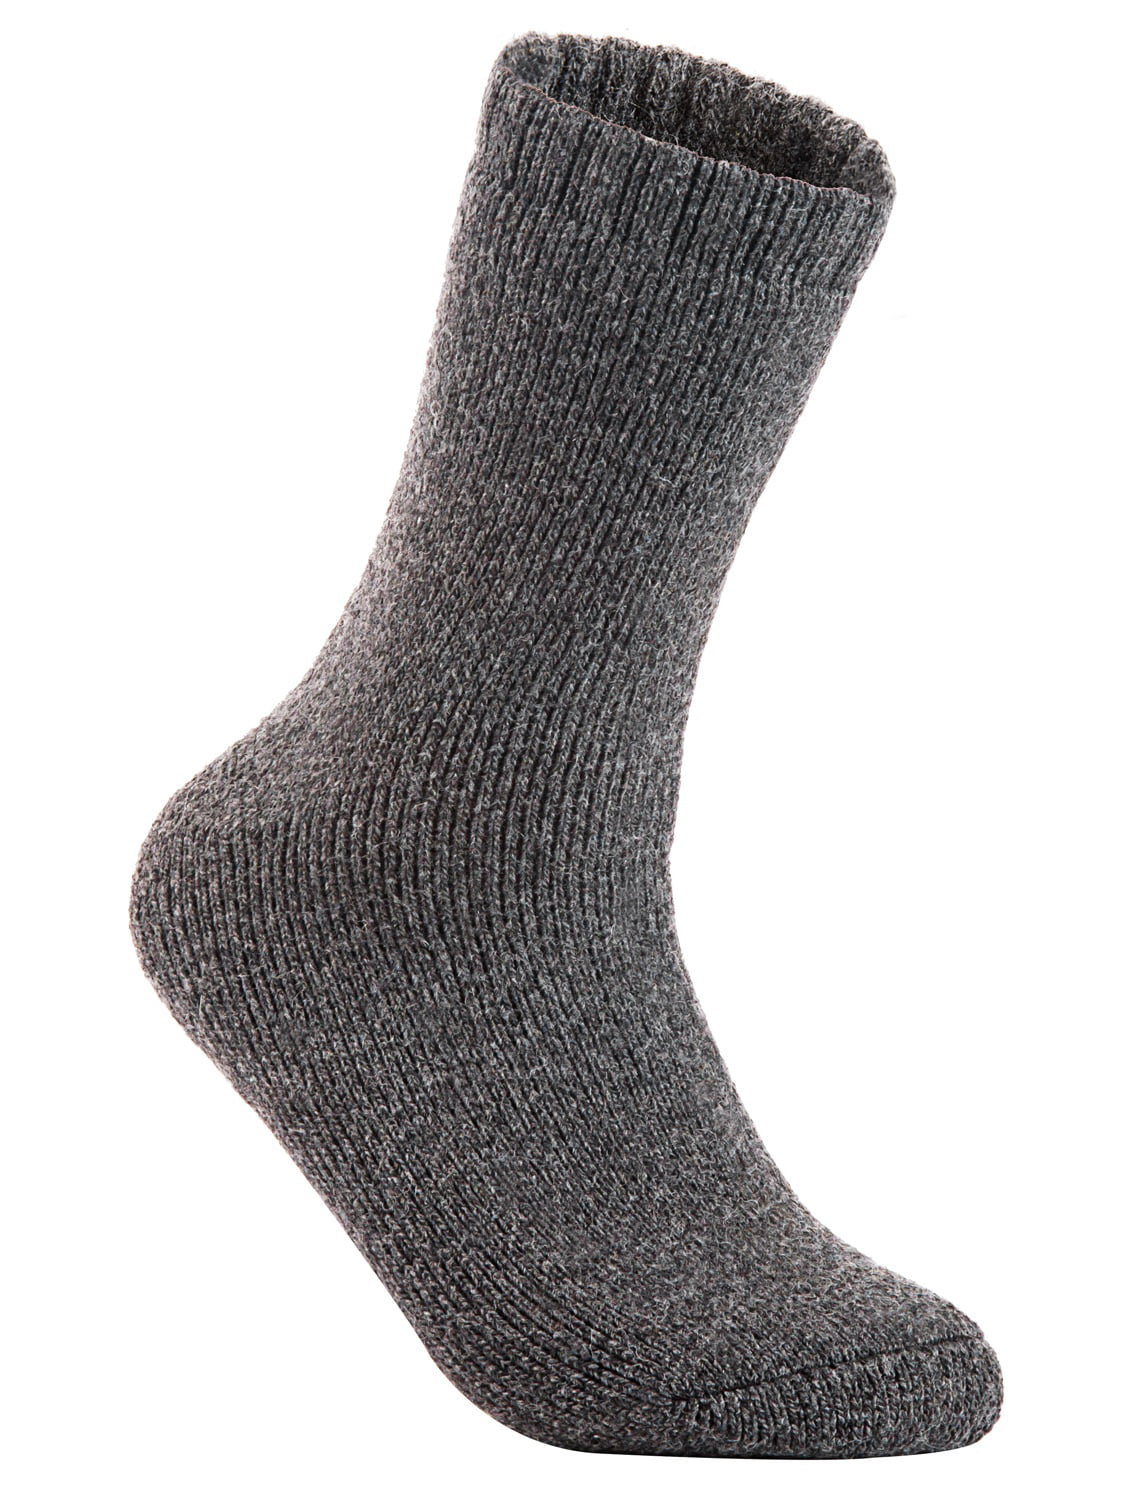 Lian LifeStyle Men's 6 Pairs Extra Thick Wool Boot Socks Crew Plain Size  6-10 LK1603 (Dark Grey)